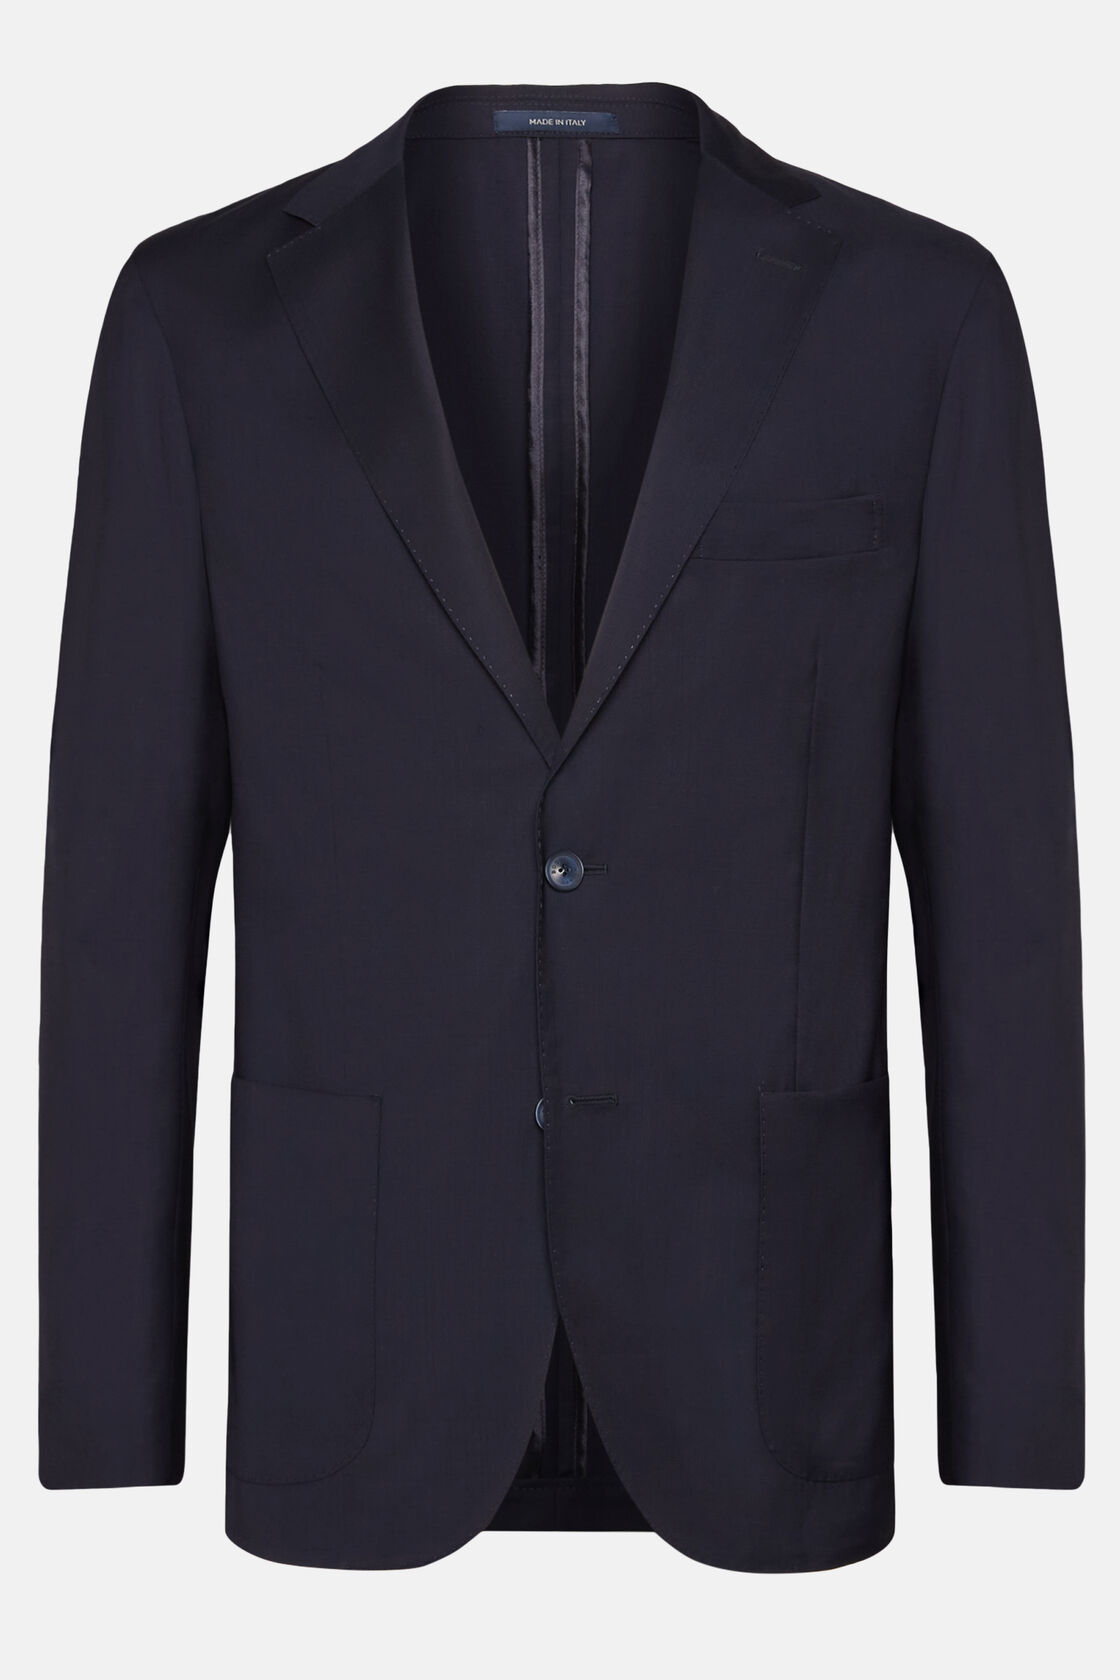 Blue Suit in B Aria Wool, , hi-res